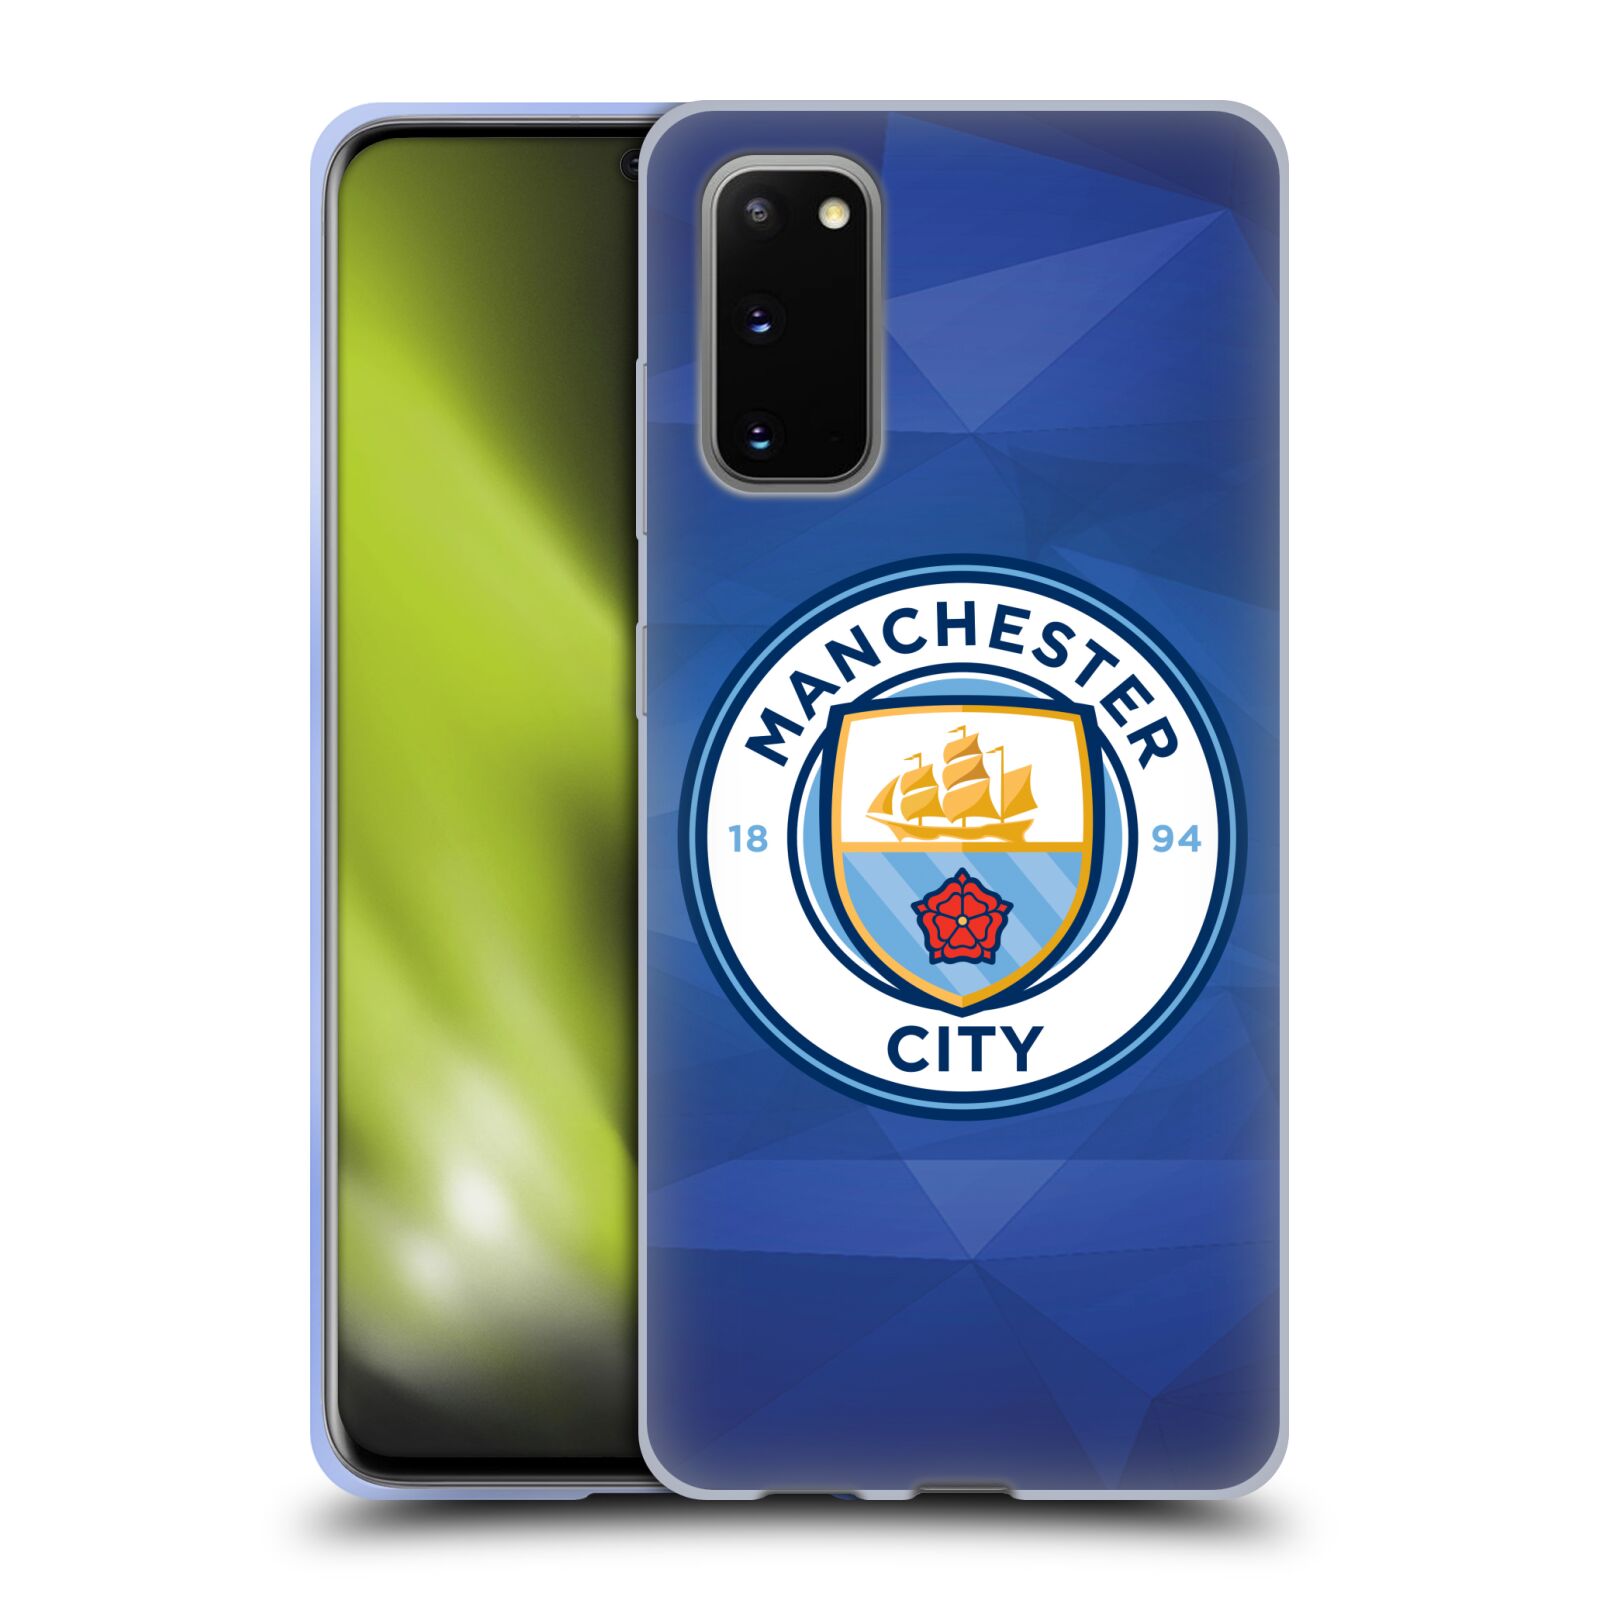 Silikonové pouzdro na mobil Samsung Galaxy S20 - Head Case - Manchester City FC - Modré nové logo